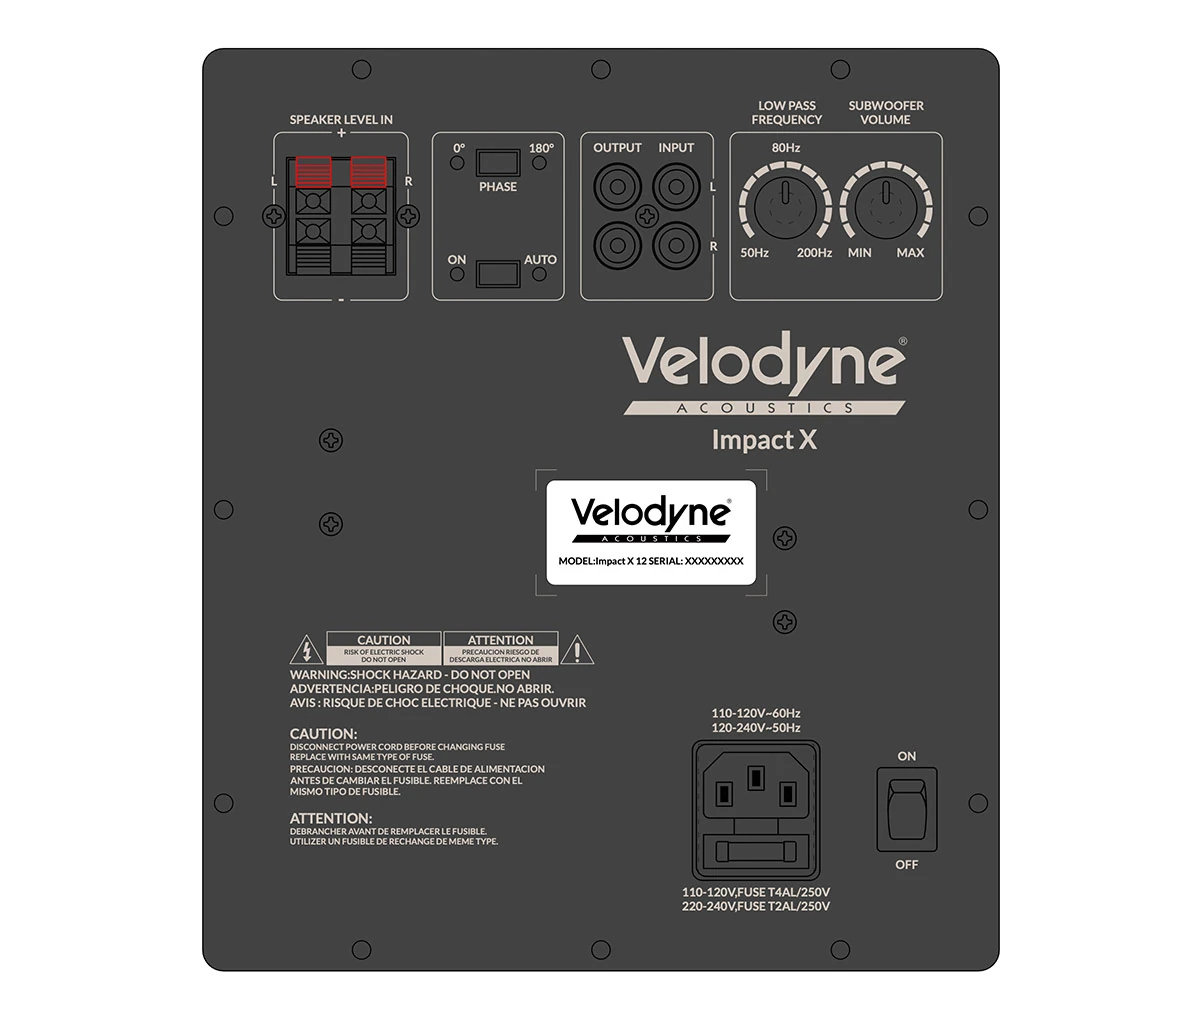 Velodyne Acoustics Impact X12 Anschluesse